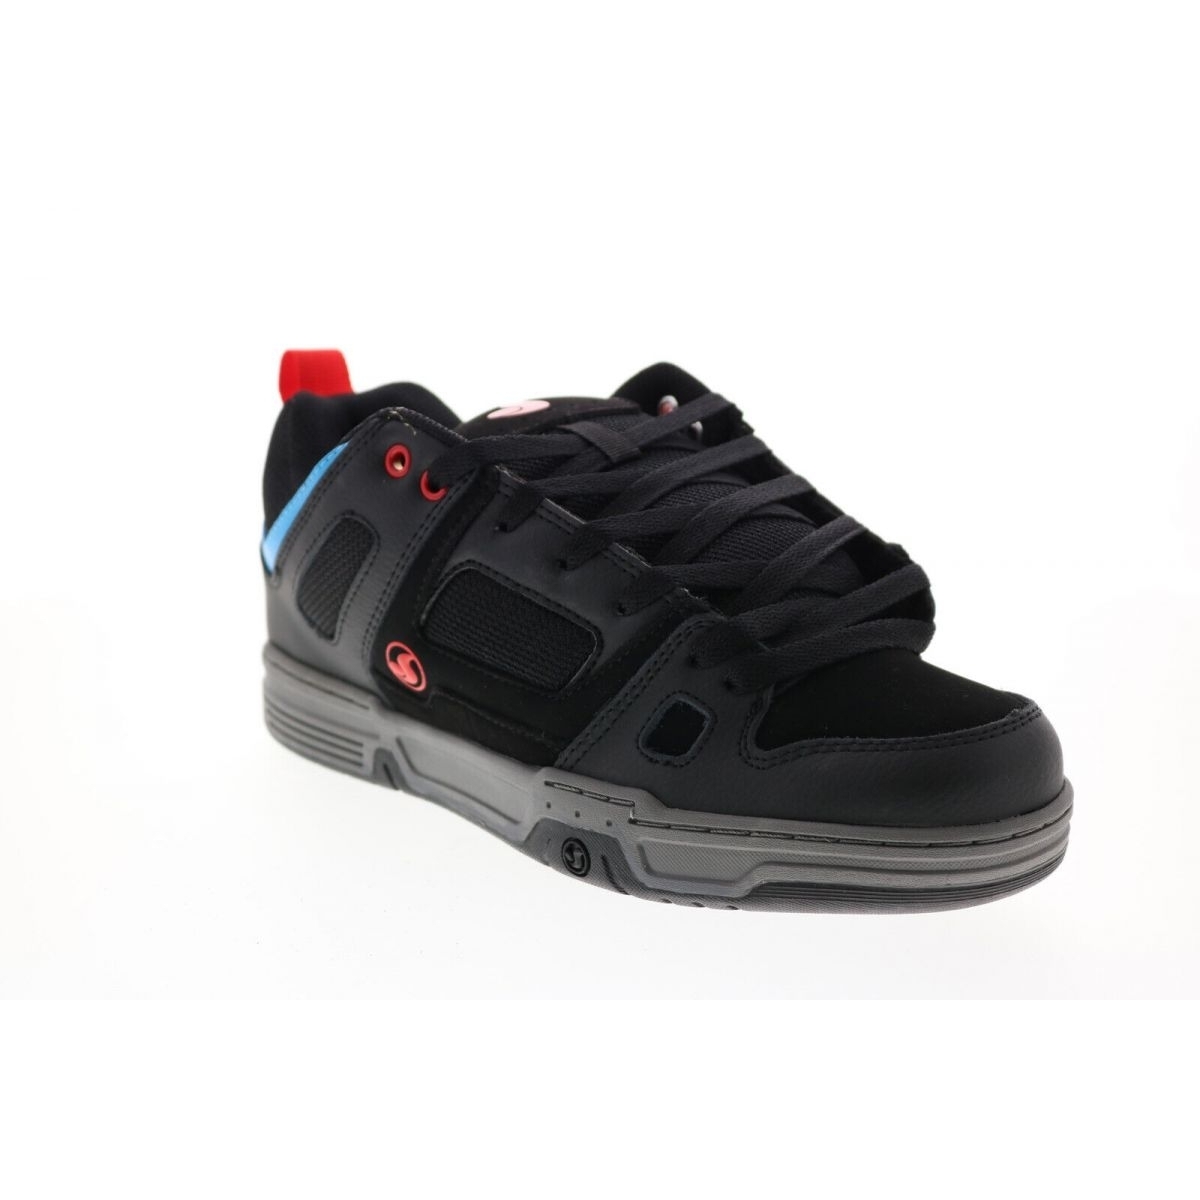 DVS Men's Gambol Skate Shoe 0 BLACK FIERY RED BLUE NUBUCK - BLACK FIERY RED BLUE NUBUCK, 8